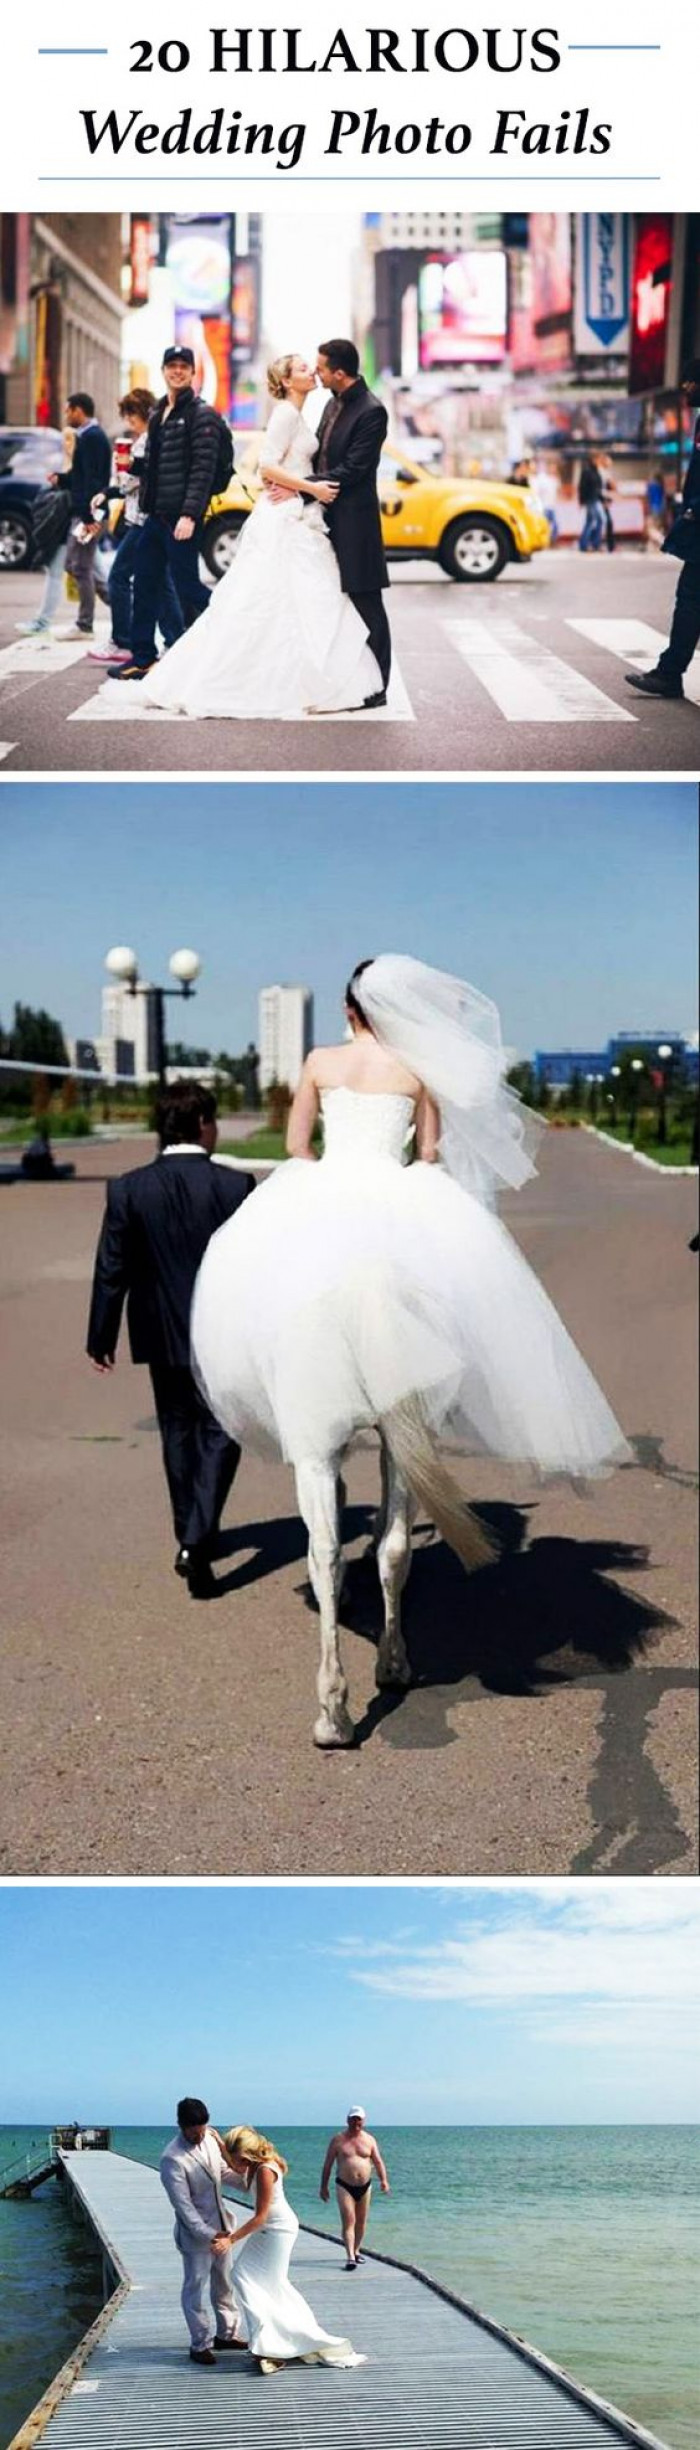 Hilarious Wedding Photo Fails